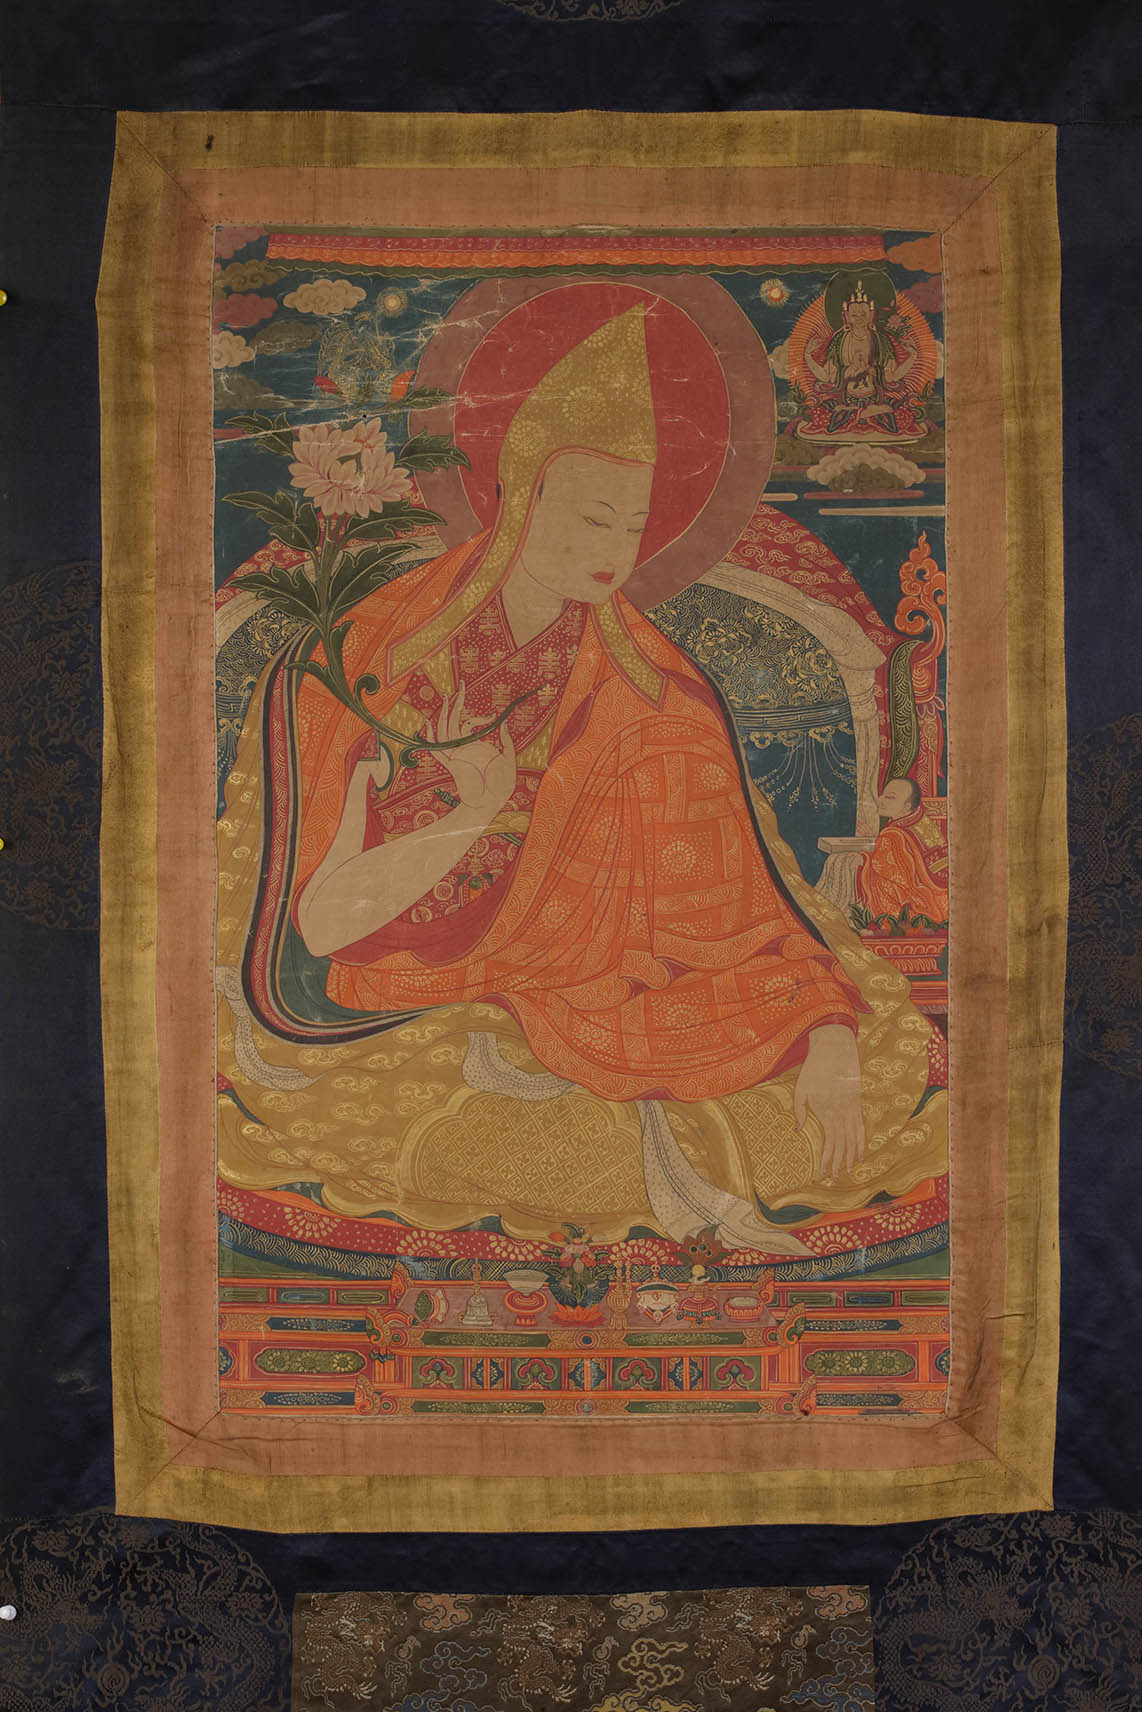 Portrait of the Fifth Dalai Lama